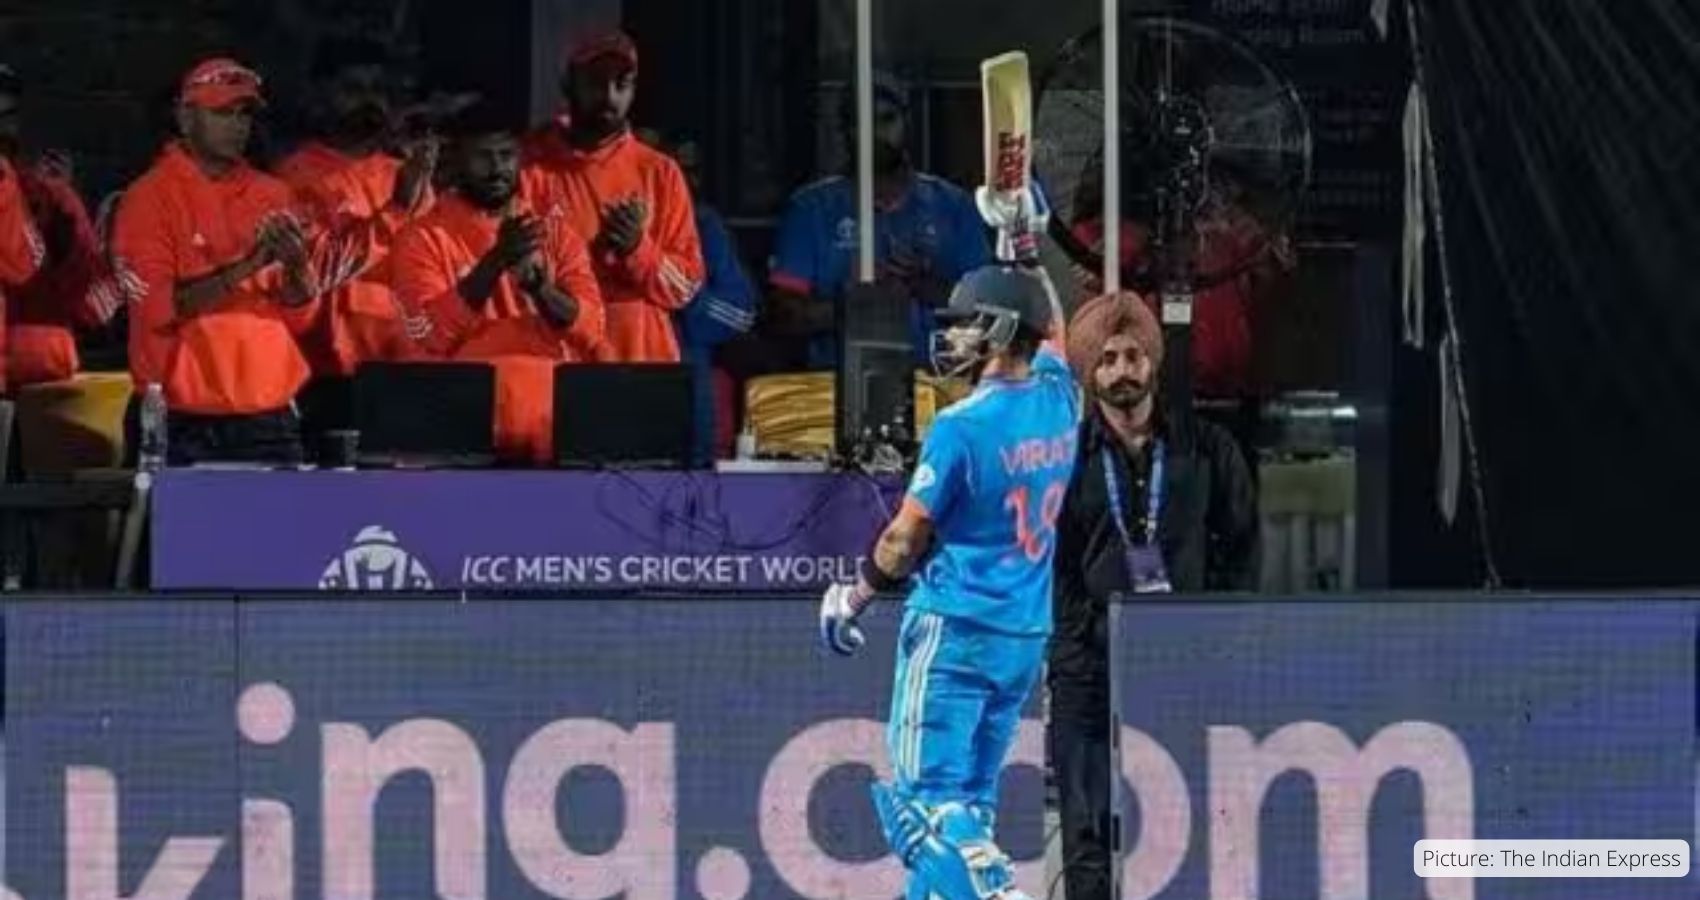 Like Sachin Tendulkar in 2011, Virat Kohli carries Team India on his shoulders